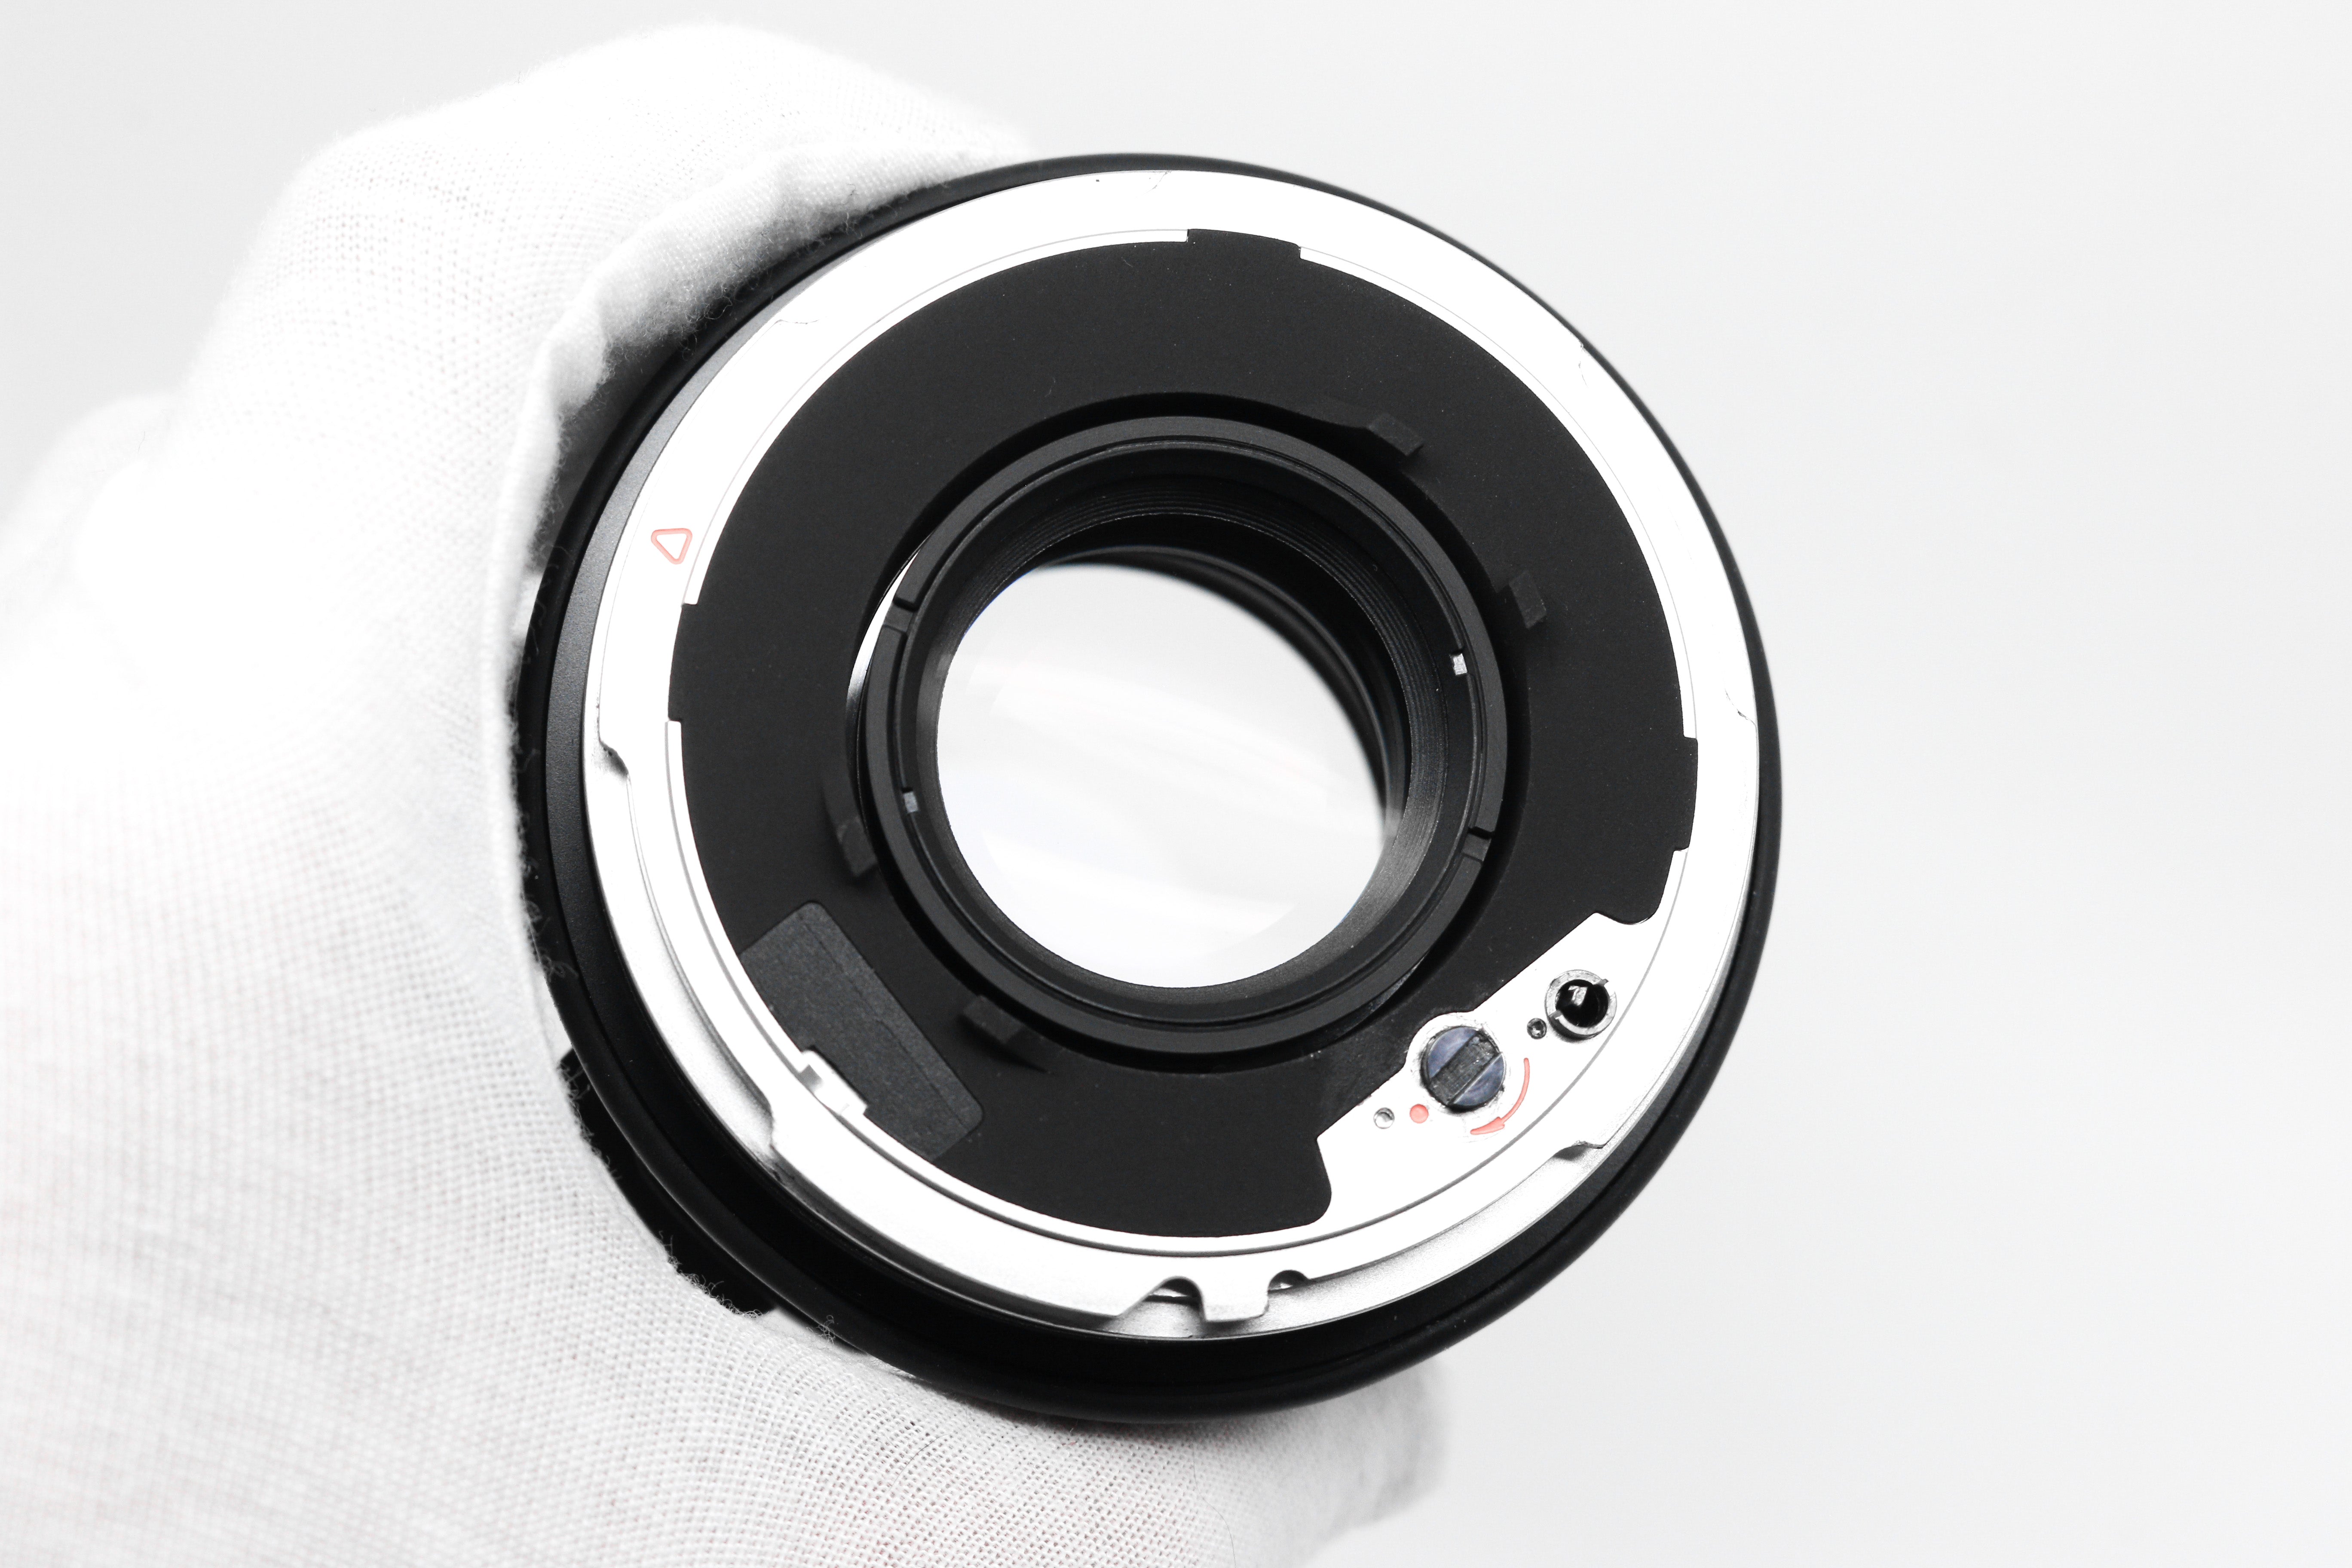 Hasselblad 501CM w/ Carl Zeiss Planar 80mm f/2.8 Lens